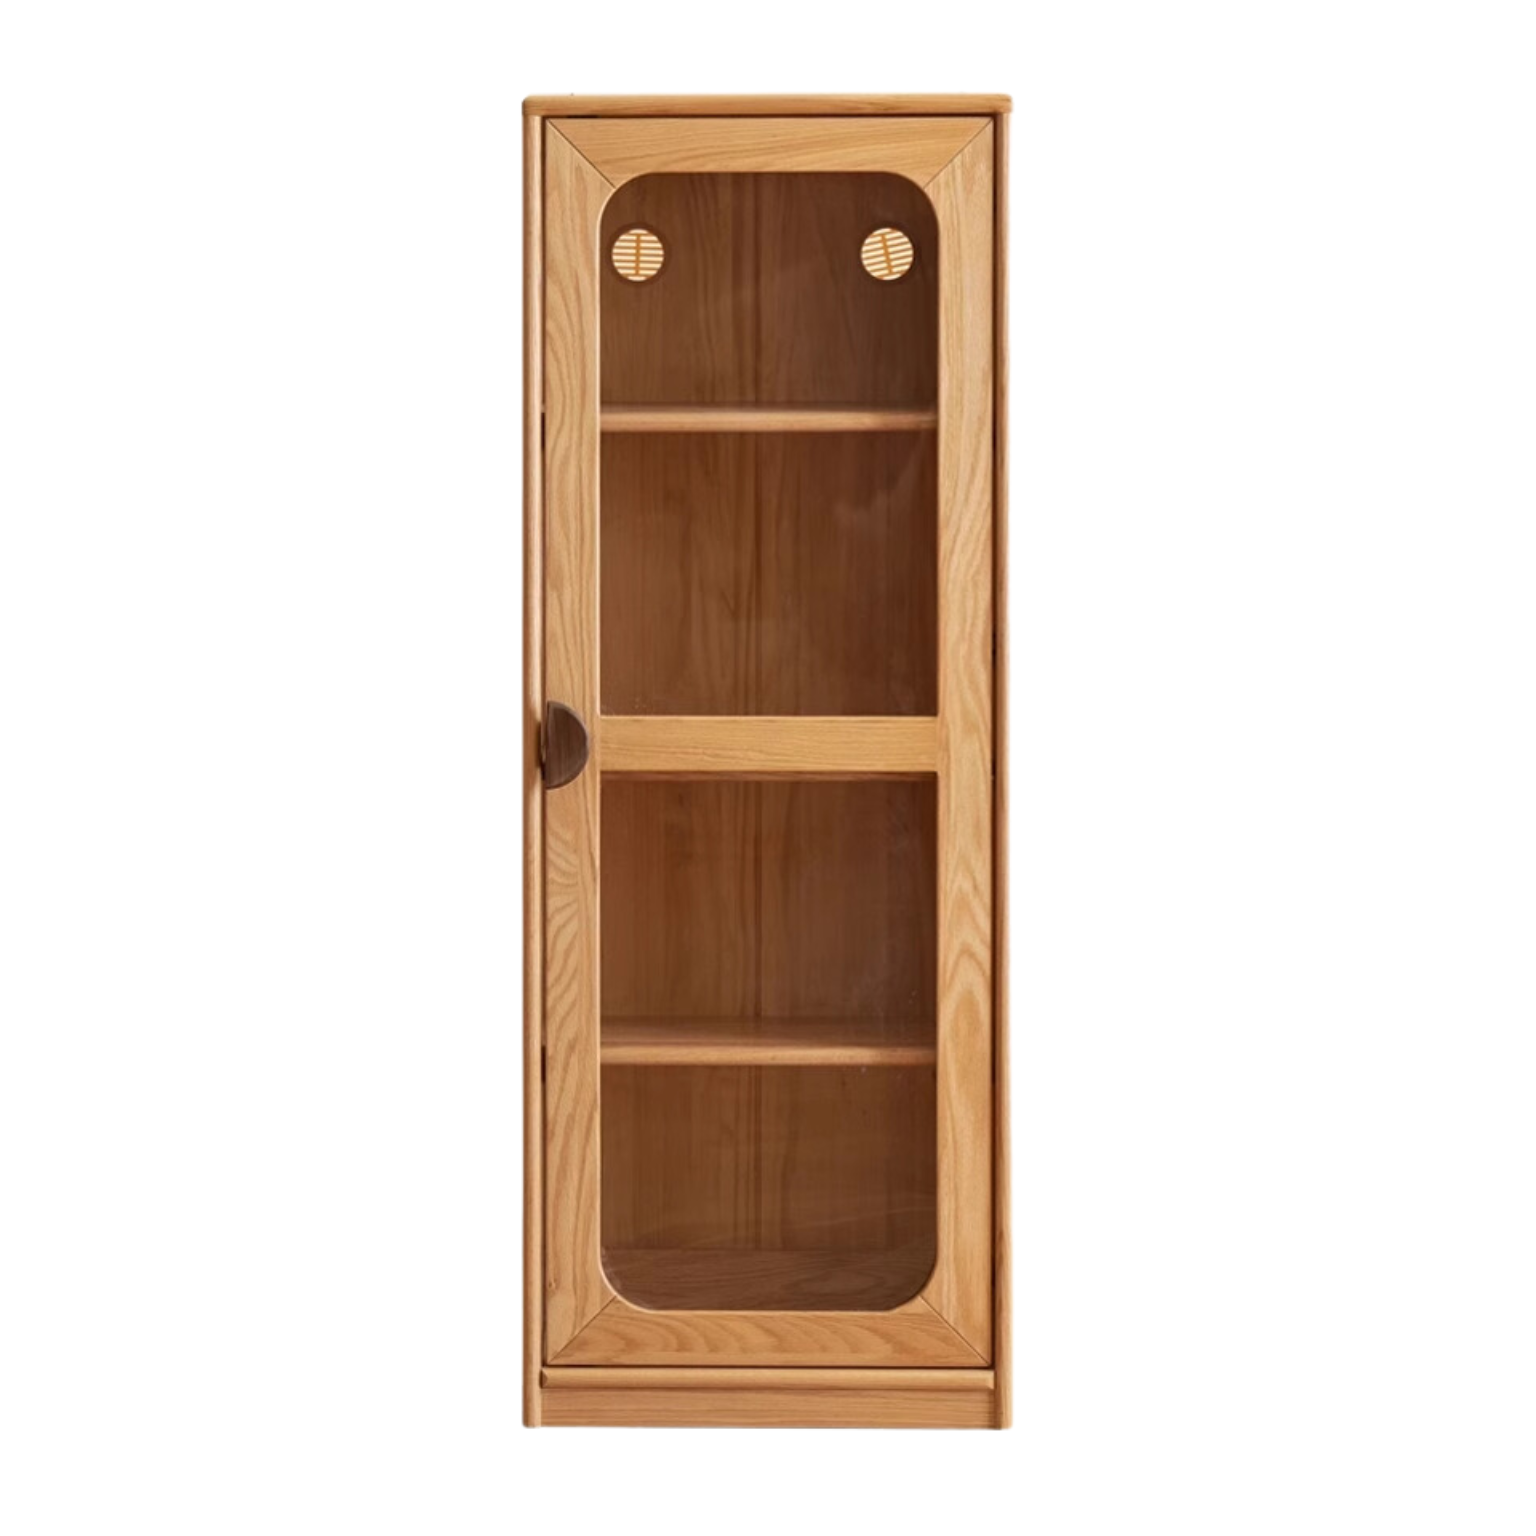 Oak solid wood kids bookcase combination bookshelf -